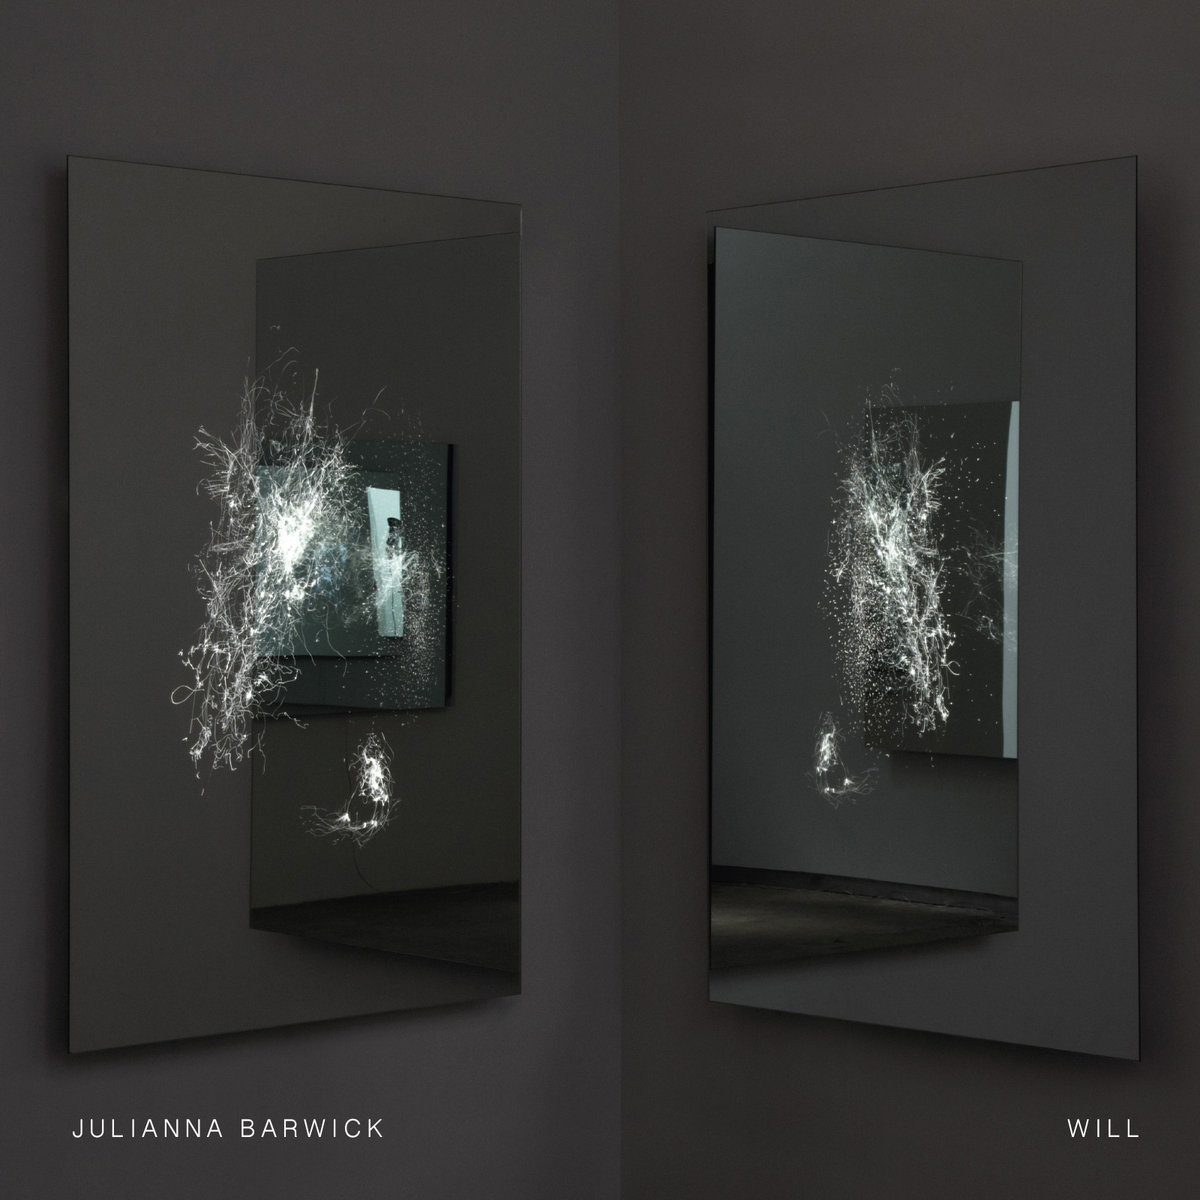 Offical album artwork of "Will" by Julianna Barwick.